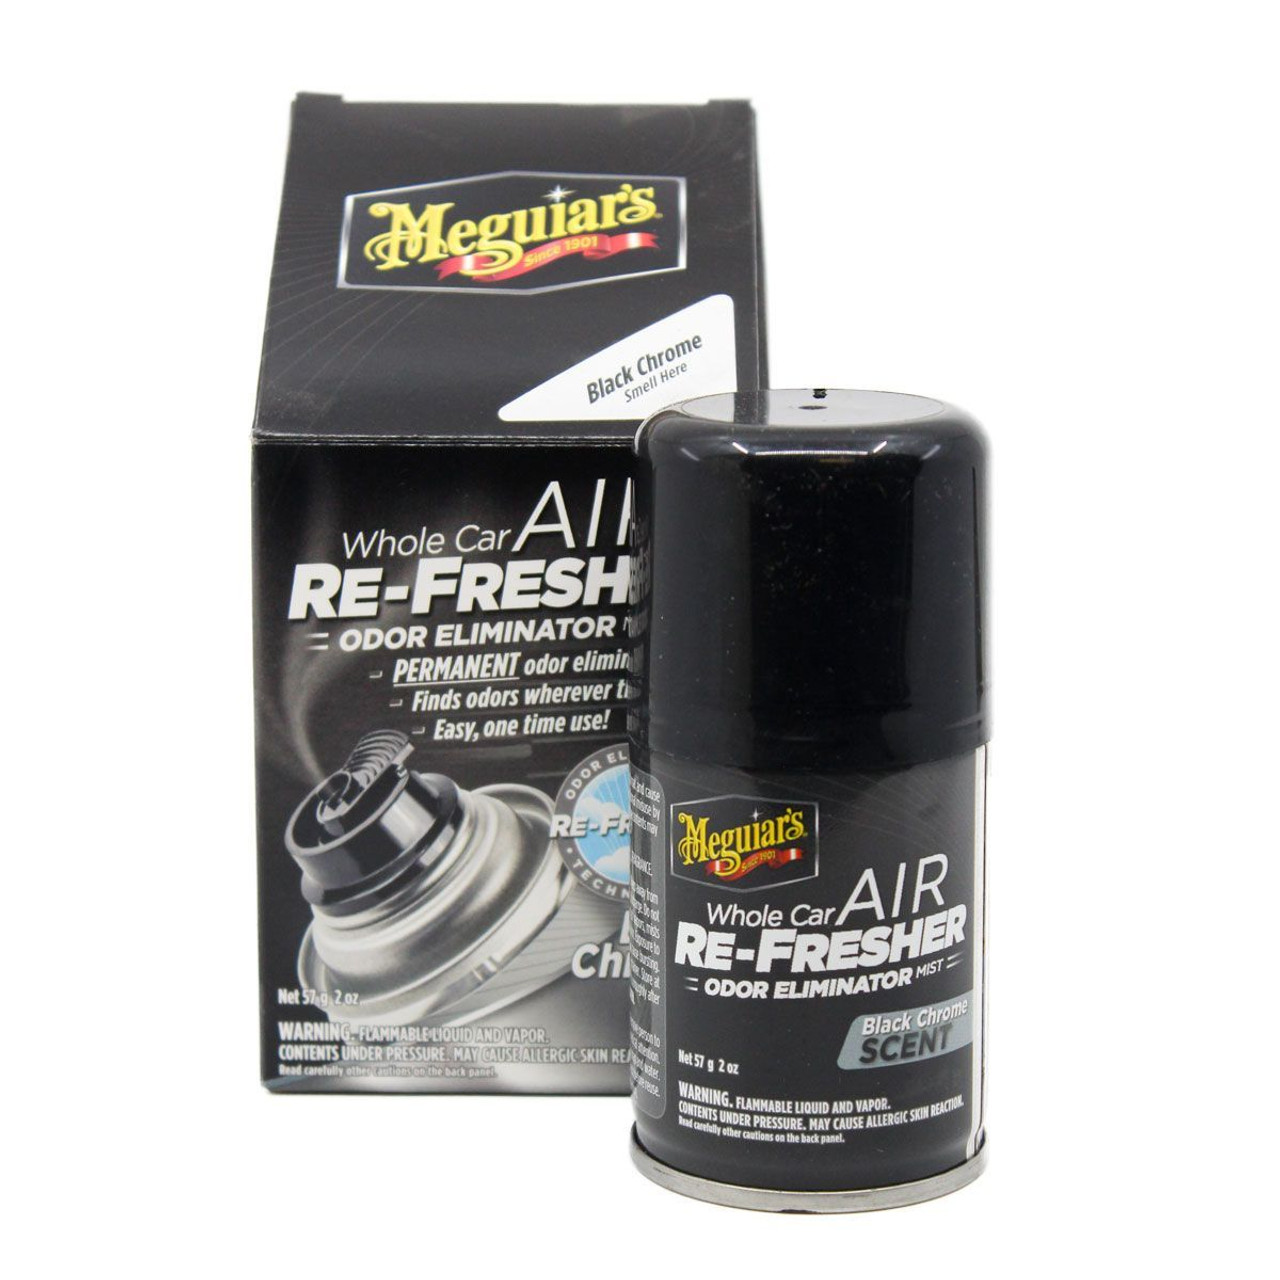 Meguiars Whole Car Air Re-Fresher Odor Eliminator Mist - 2 oz. Aerosol